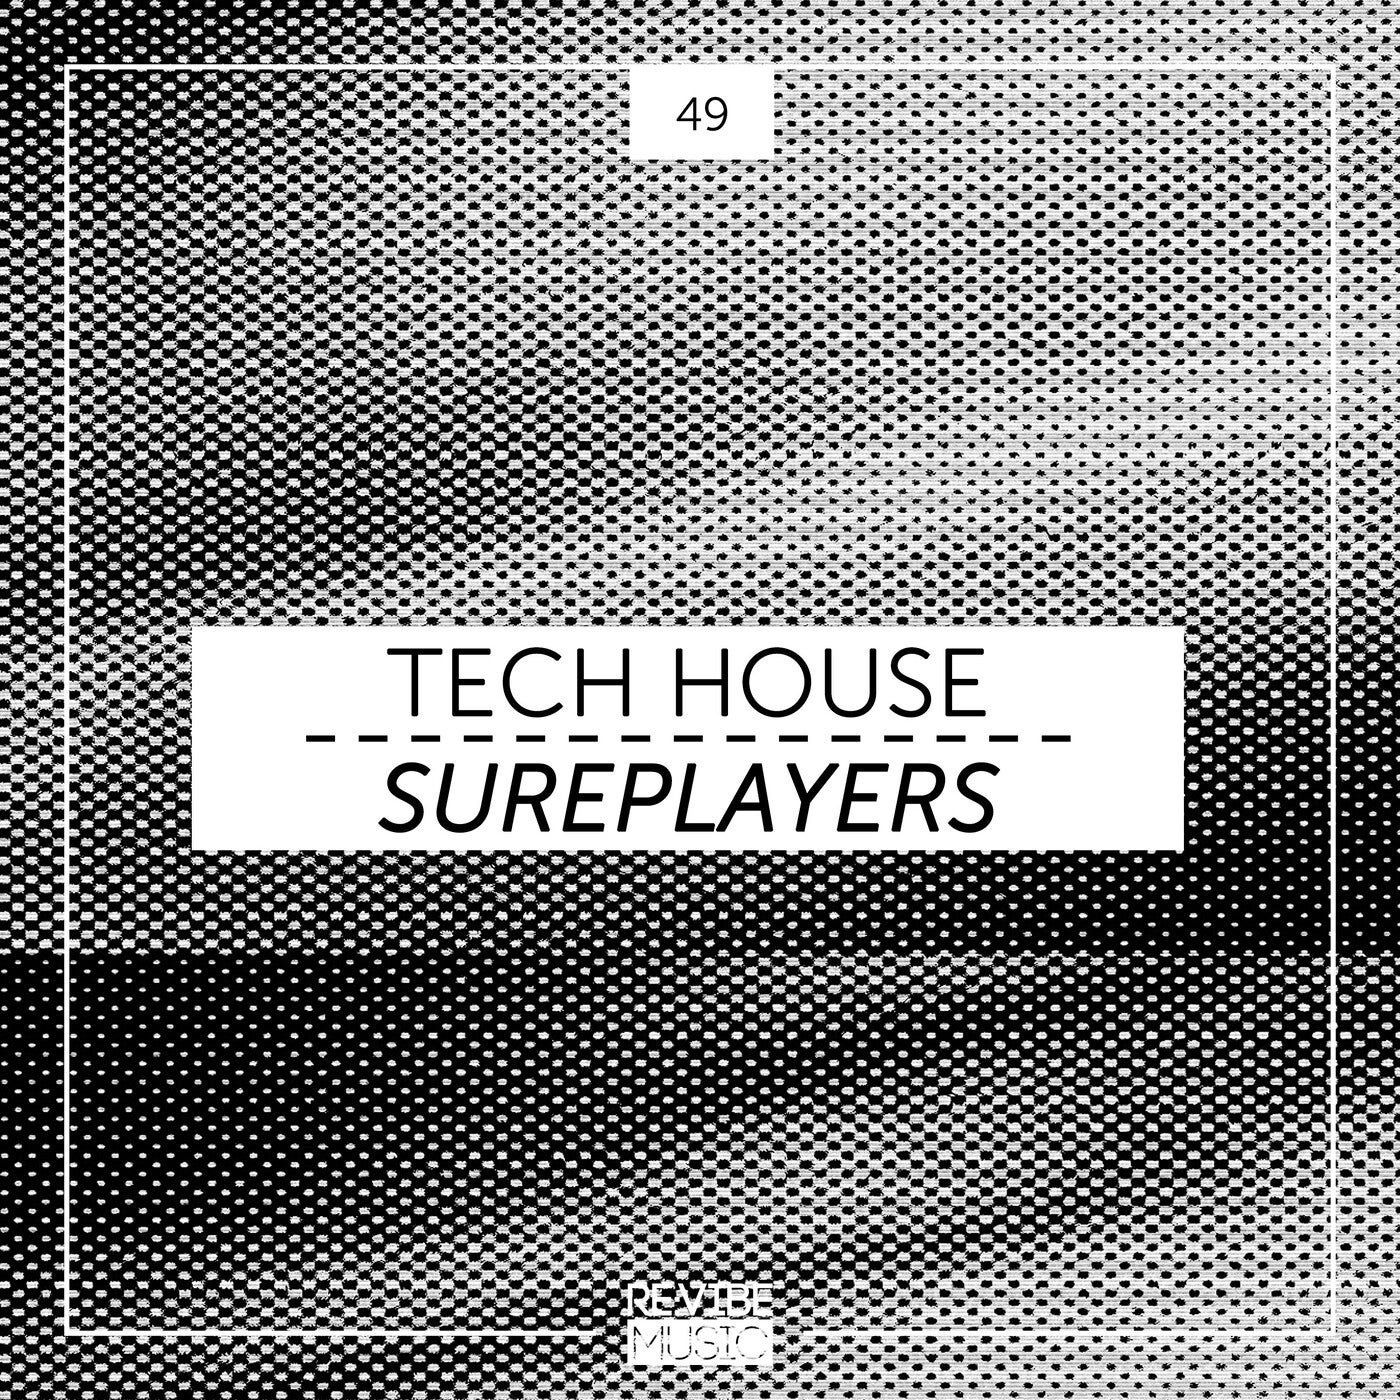 Tech House Sureplayers, Vol. 49